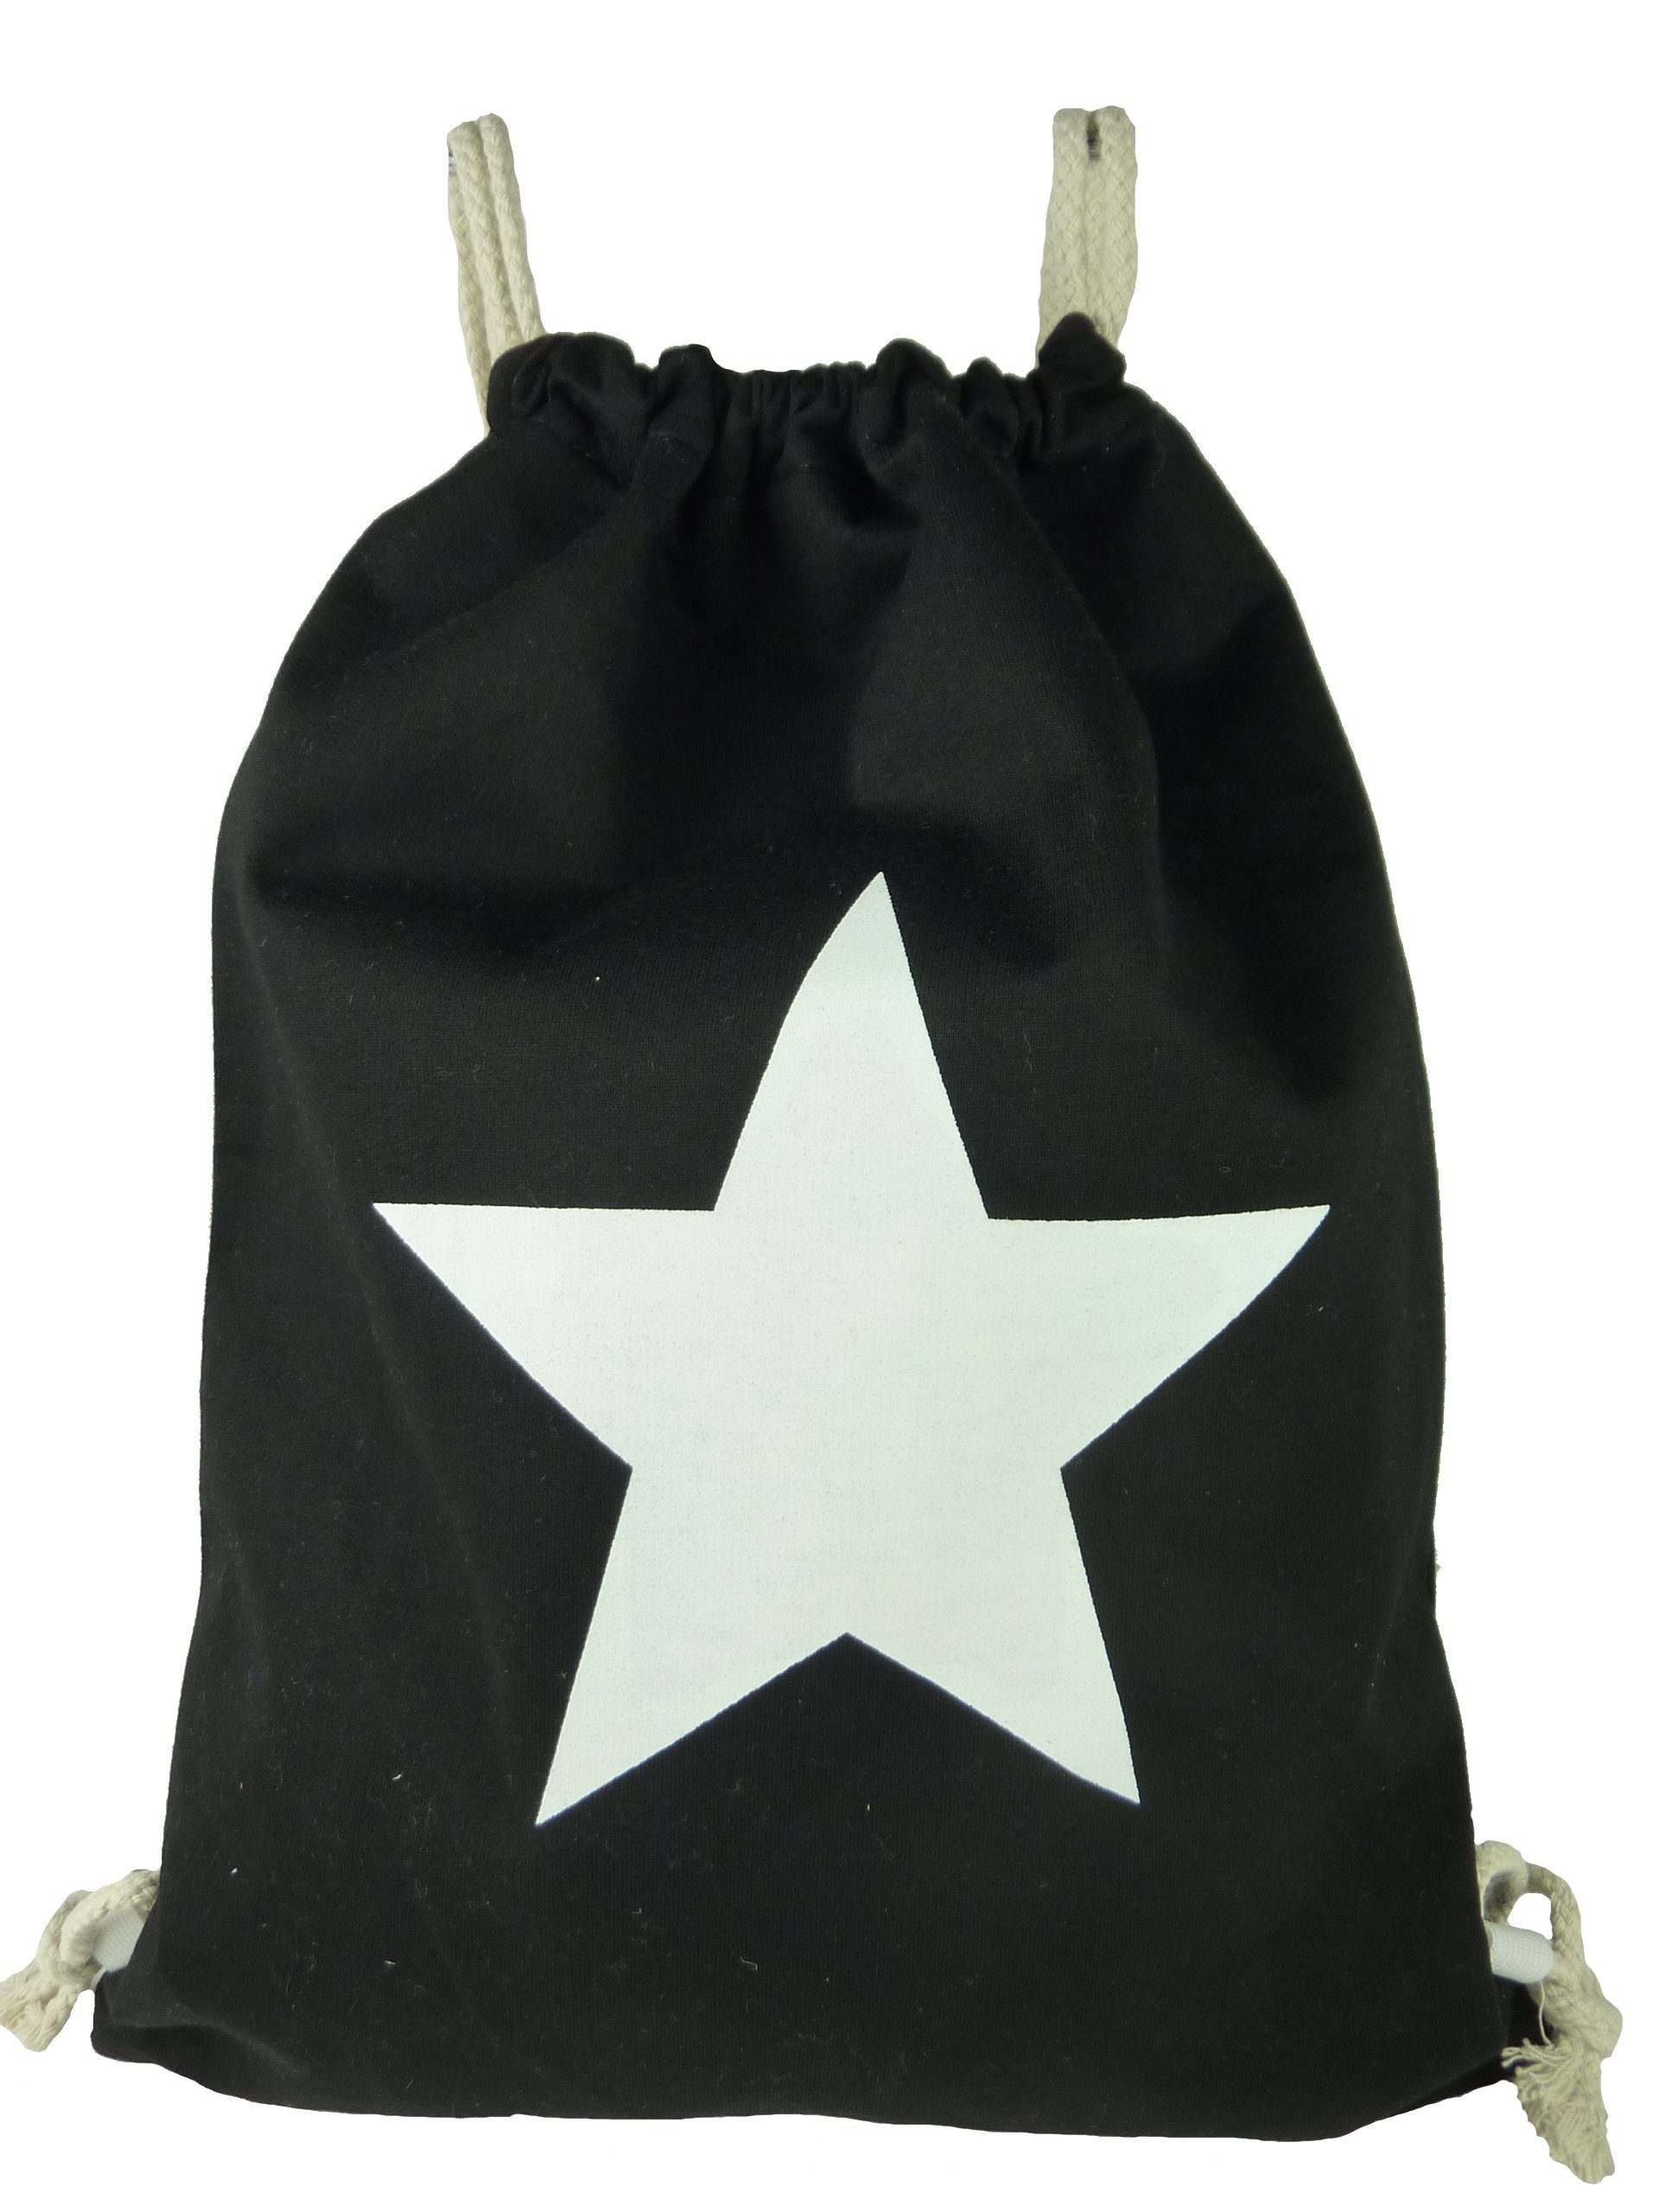 Taschen4life Gymbag Turnbeutel Rucksack 1605, mit großem Stern, Jute Beutel, sling bag, Sportbeutel schwarz